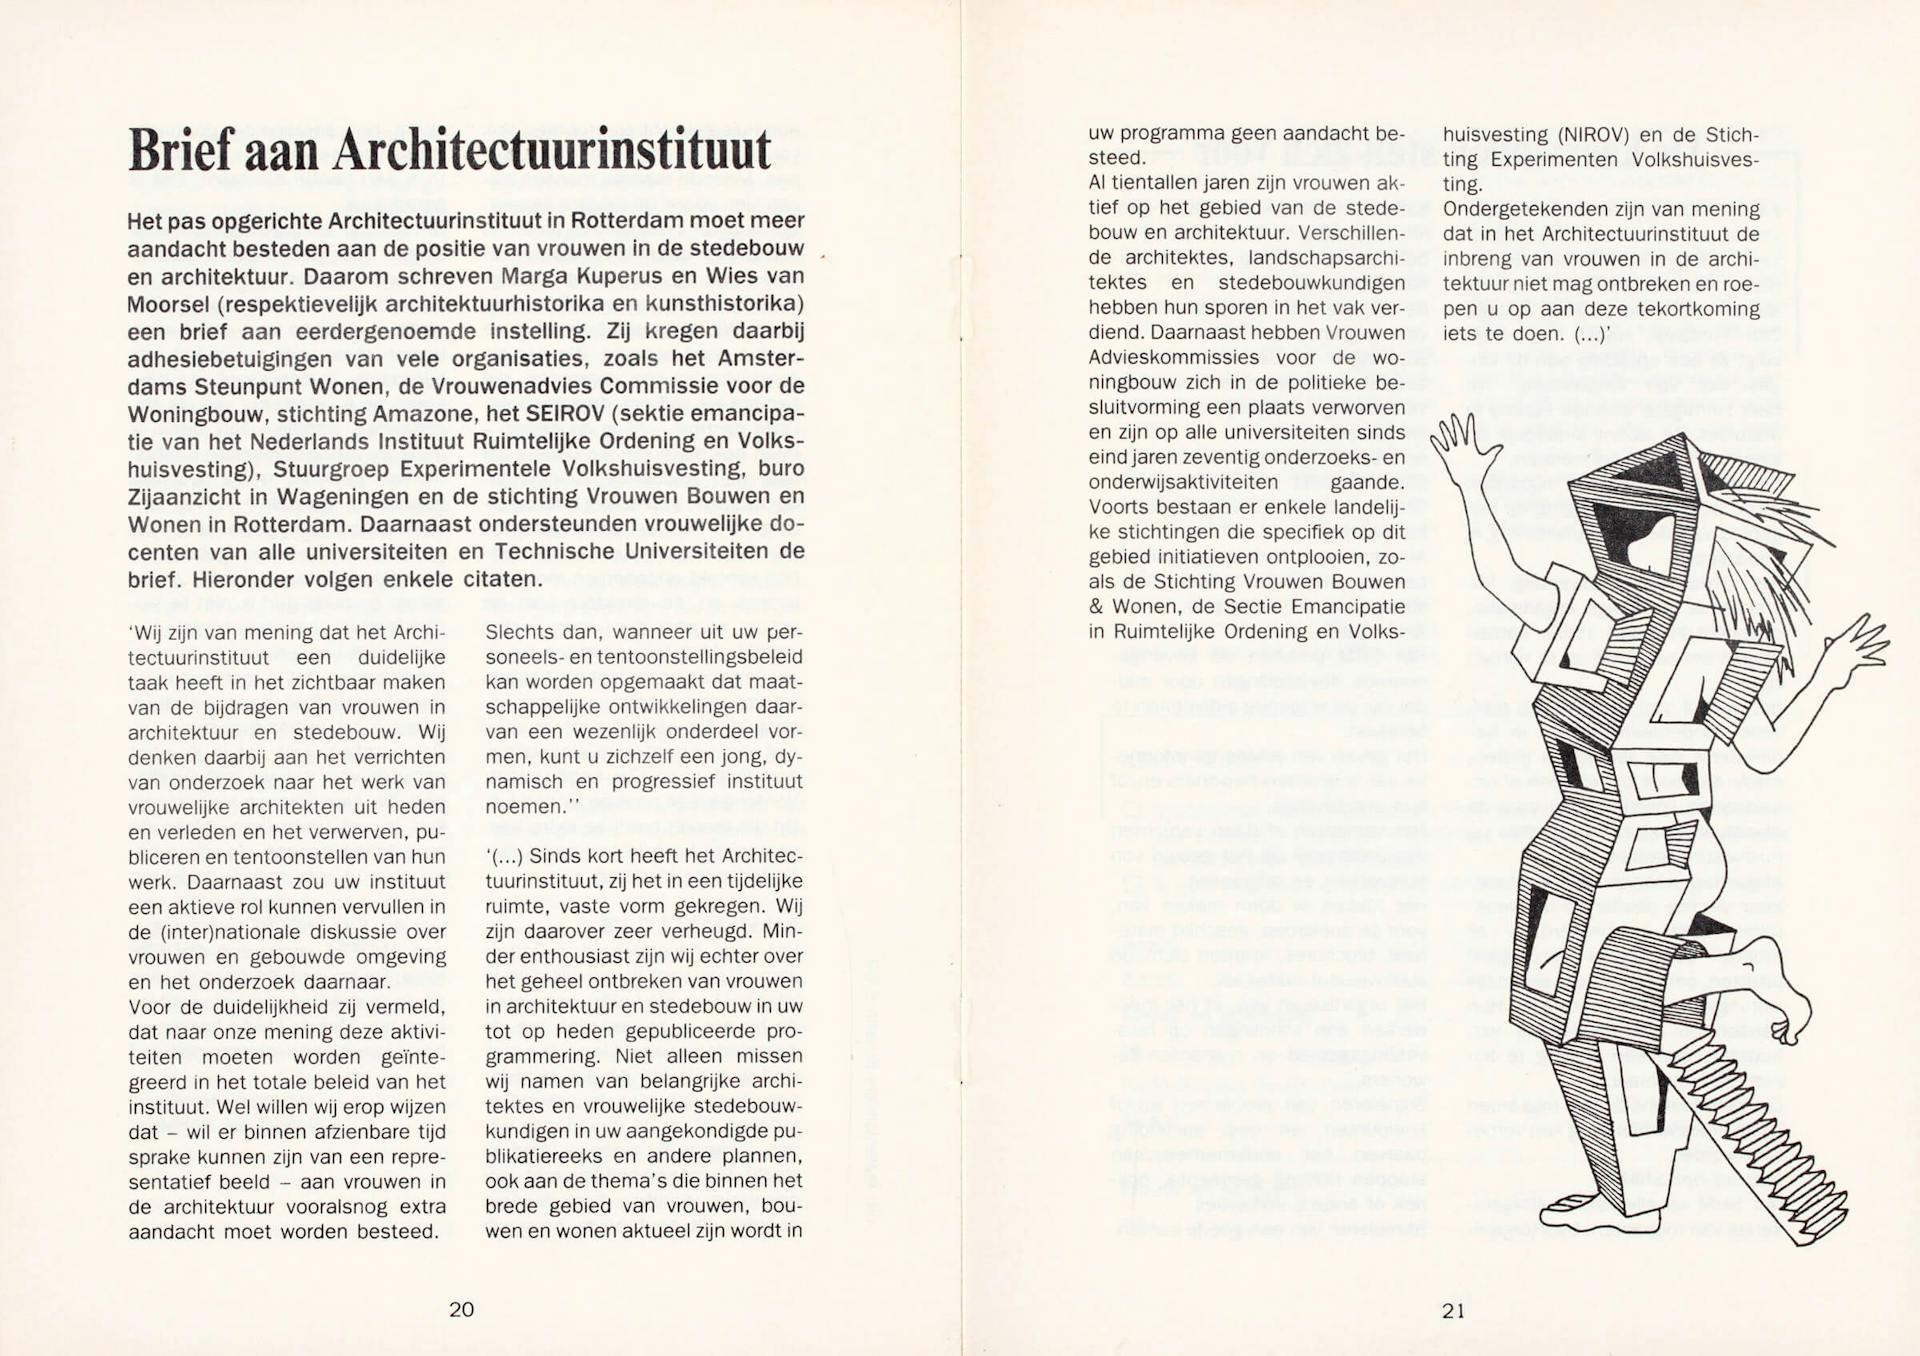 [Letter to Architecture Institute], published in parts in Vrouwen Bouwen Wonen Bulletin, 1989. Source: archive Vrouwen Bouwen Wonen / Bureau Tussen-Ruimte. Donation Lidewij Tummers, Collection Het Nieuwe Instituut  